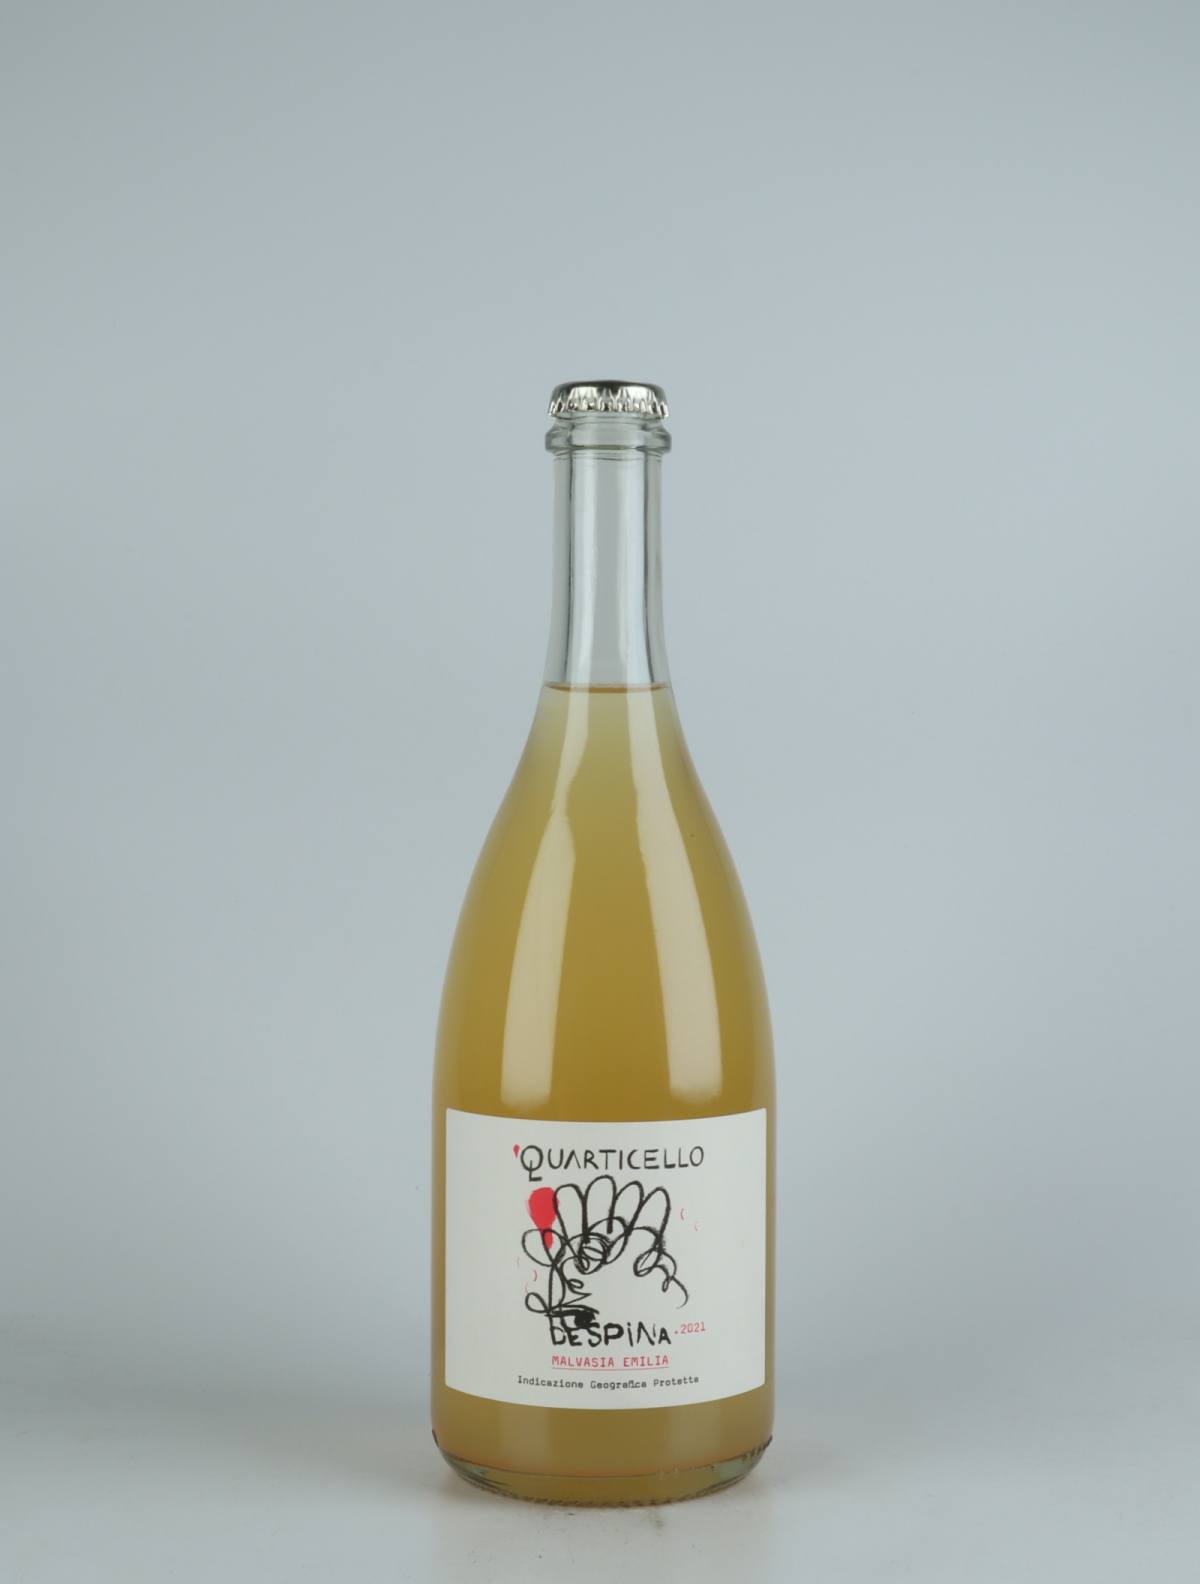 A bottle  Despina Sparkling from Quarticello, Emilia-Romagna in Italy